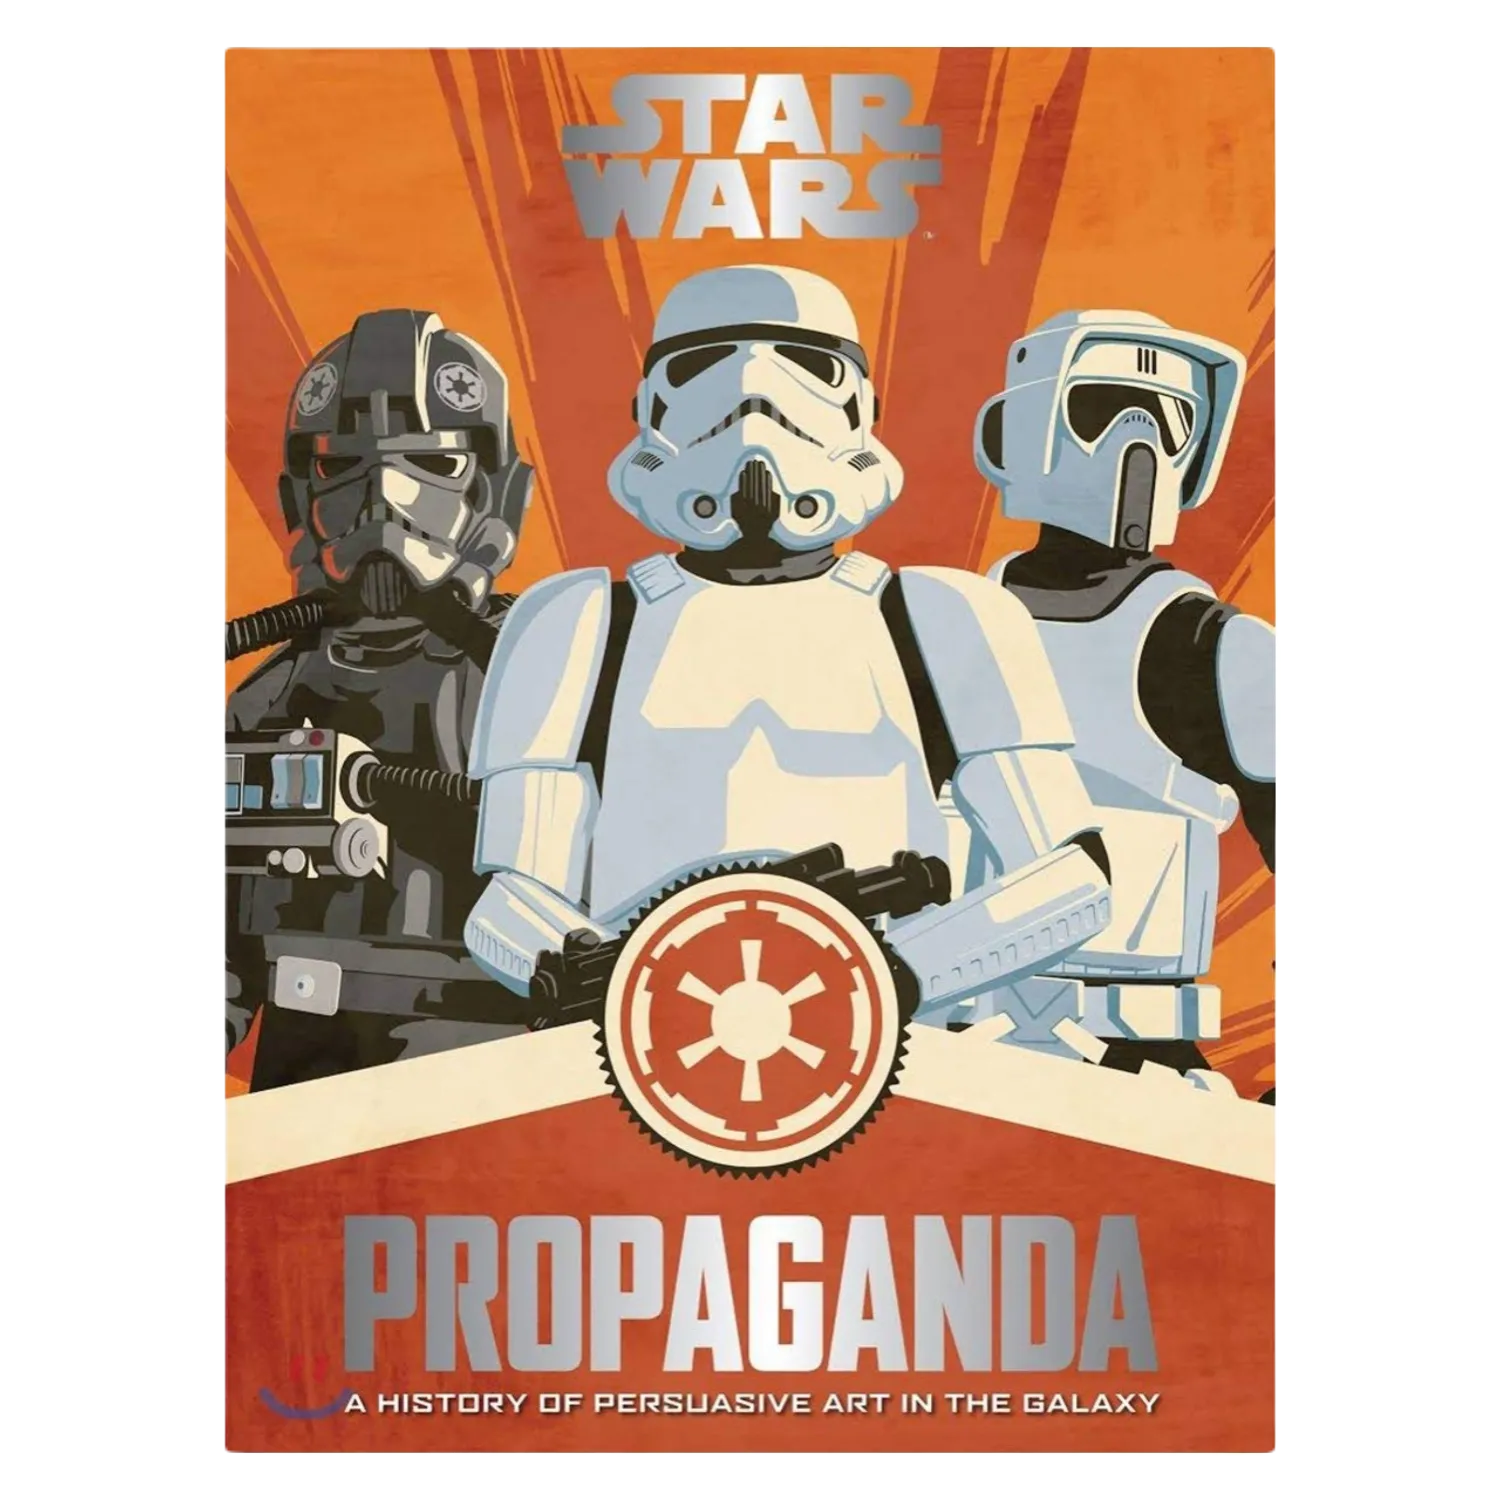 Star Wars Propaganda: A History of Persuasive Art in the Galaxy by Pablo Hidalgo (2016)